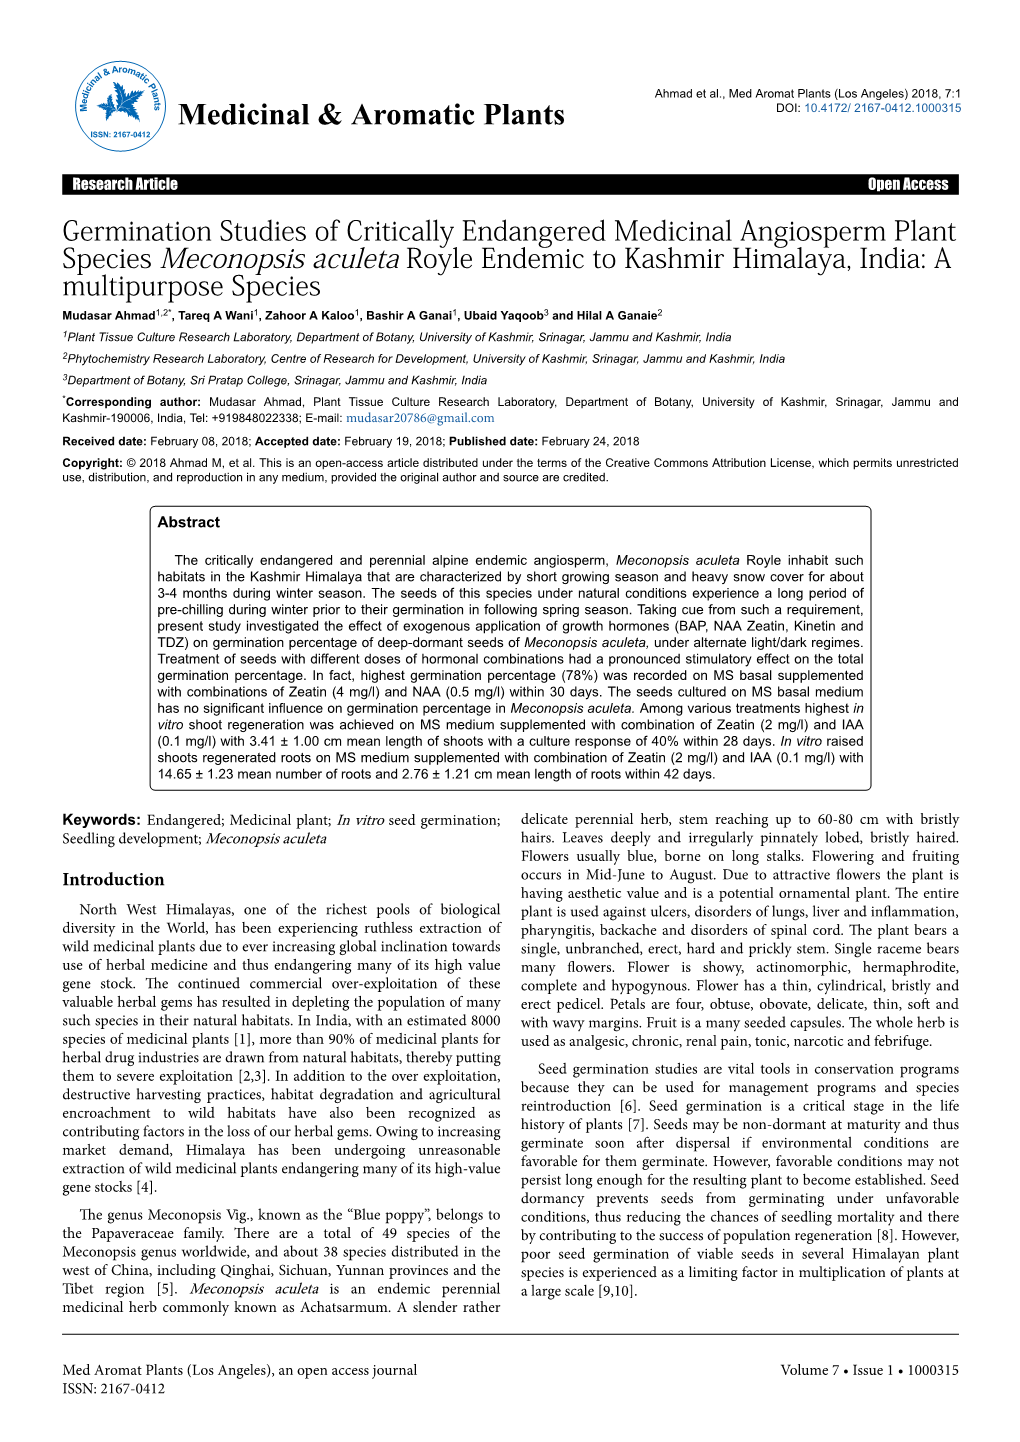 Germination Studies of Critically Endangered Medicinal Angiosperm